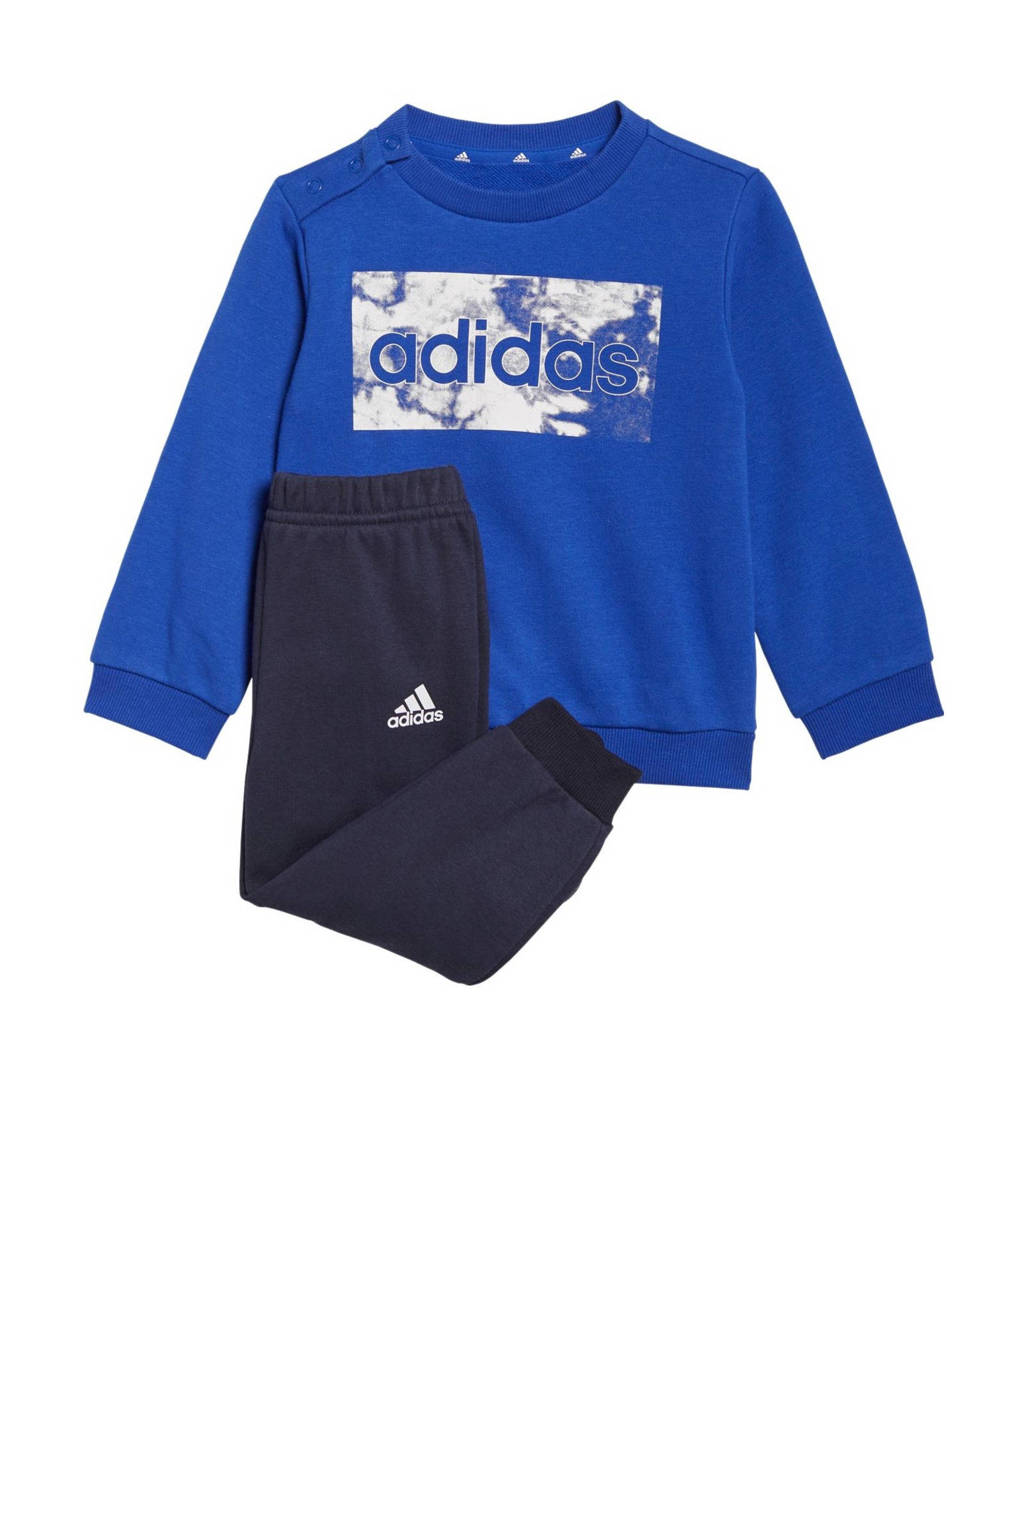 adidas Performance joggingpak kobaltblauw/donkerblauw/wit